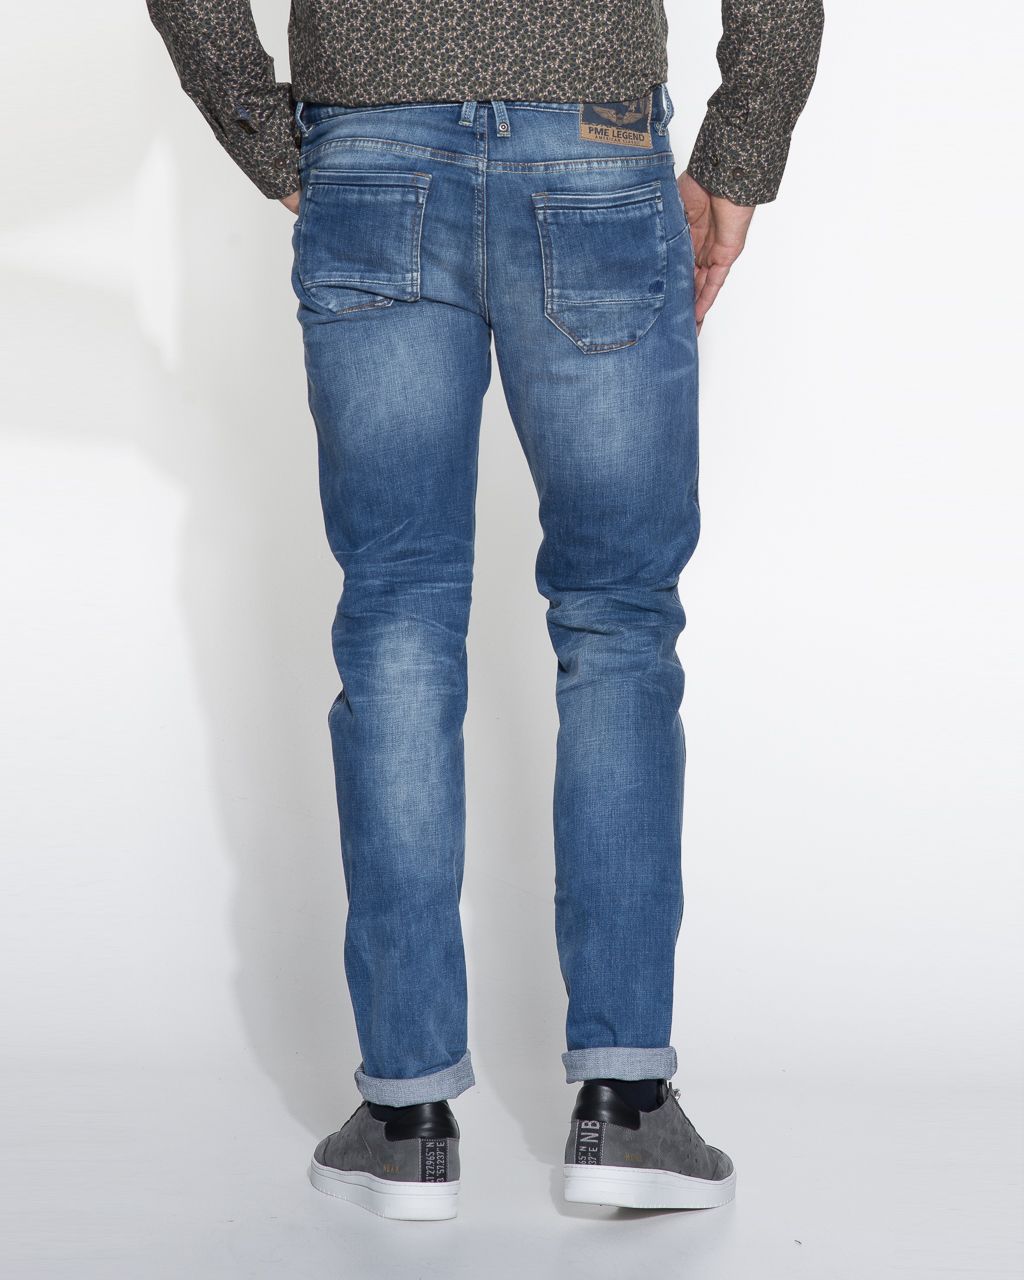 PME Legend Nightflight Jeans | Shop nu - OFM.